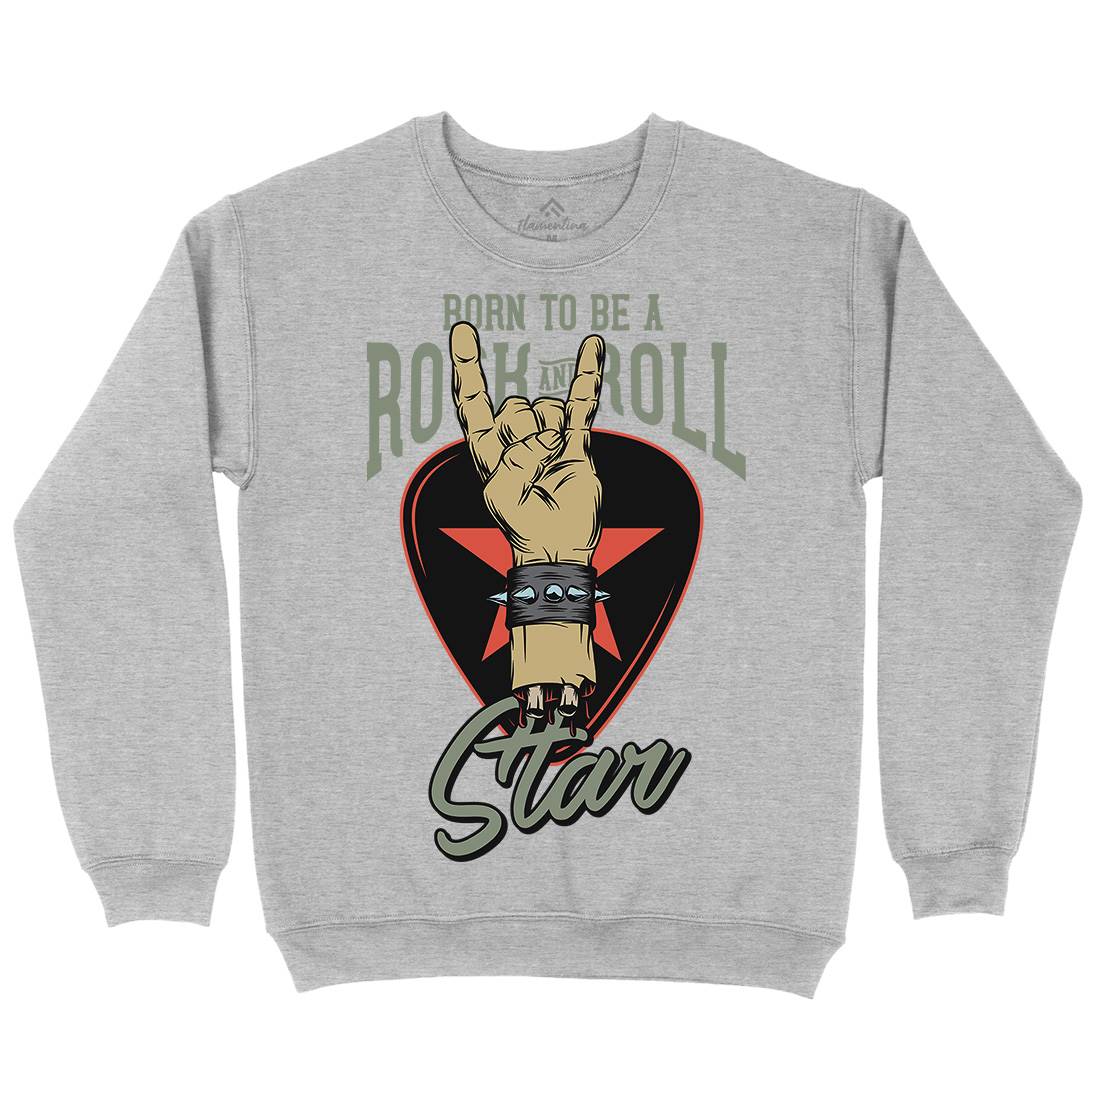 Rock And Roll Star Mens Crew Neck Sweatshirt Music D965